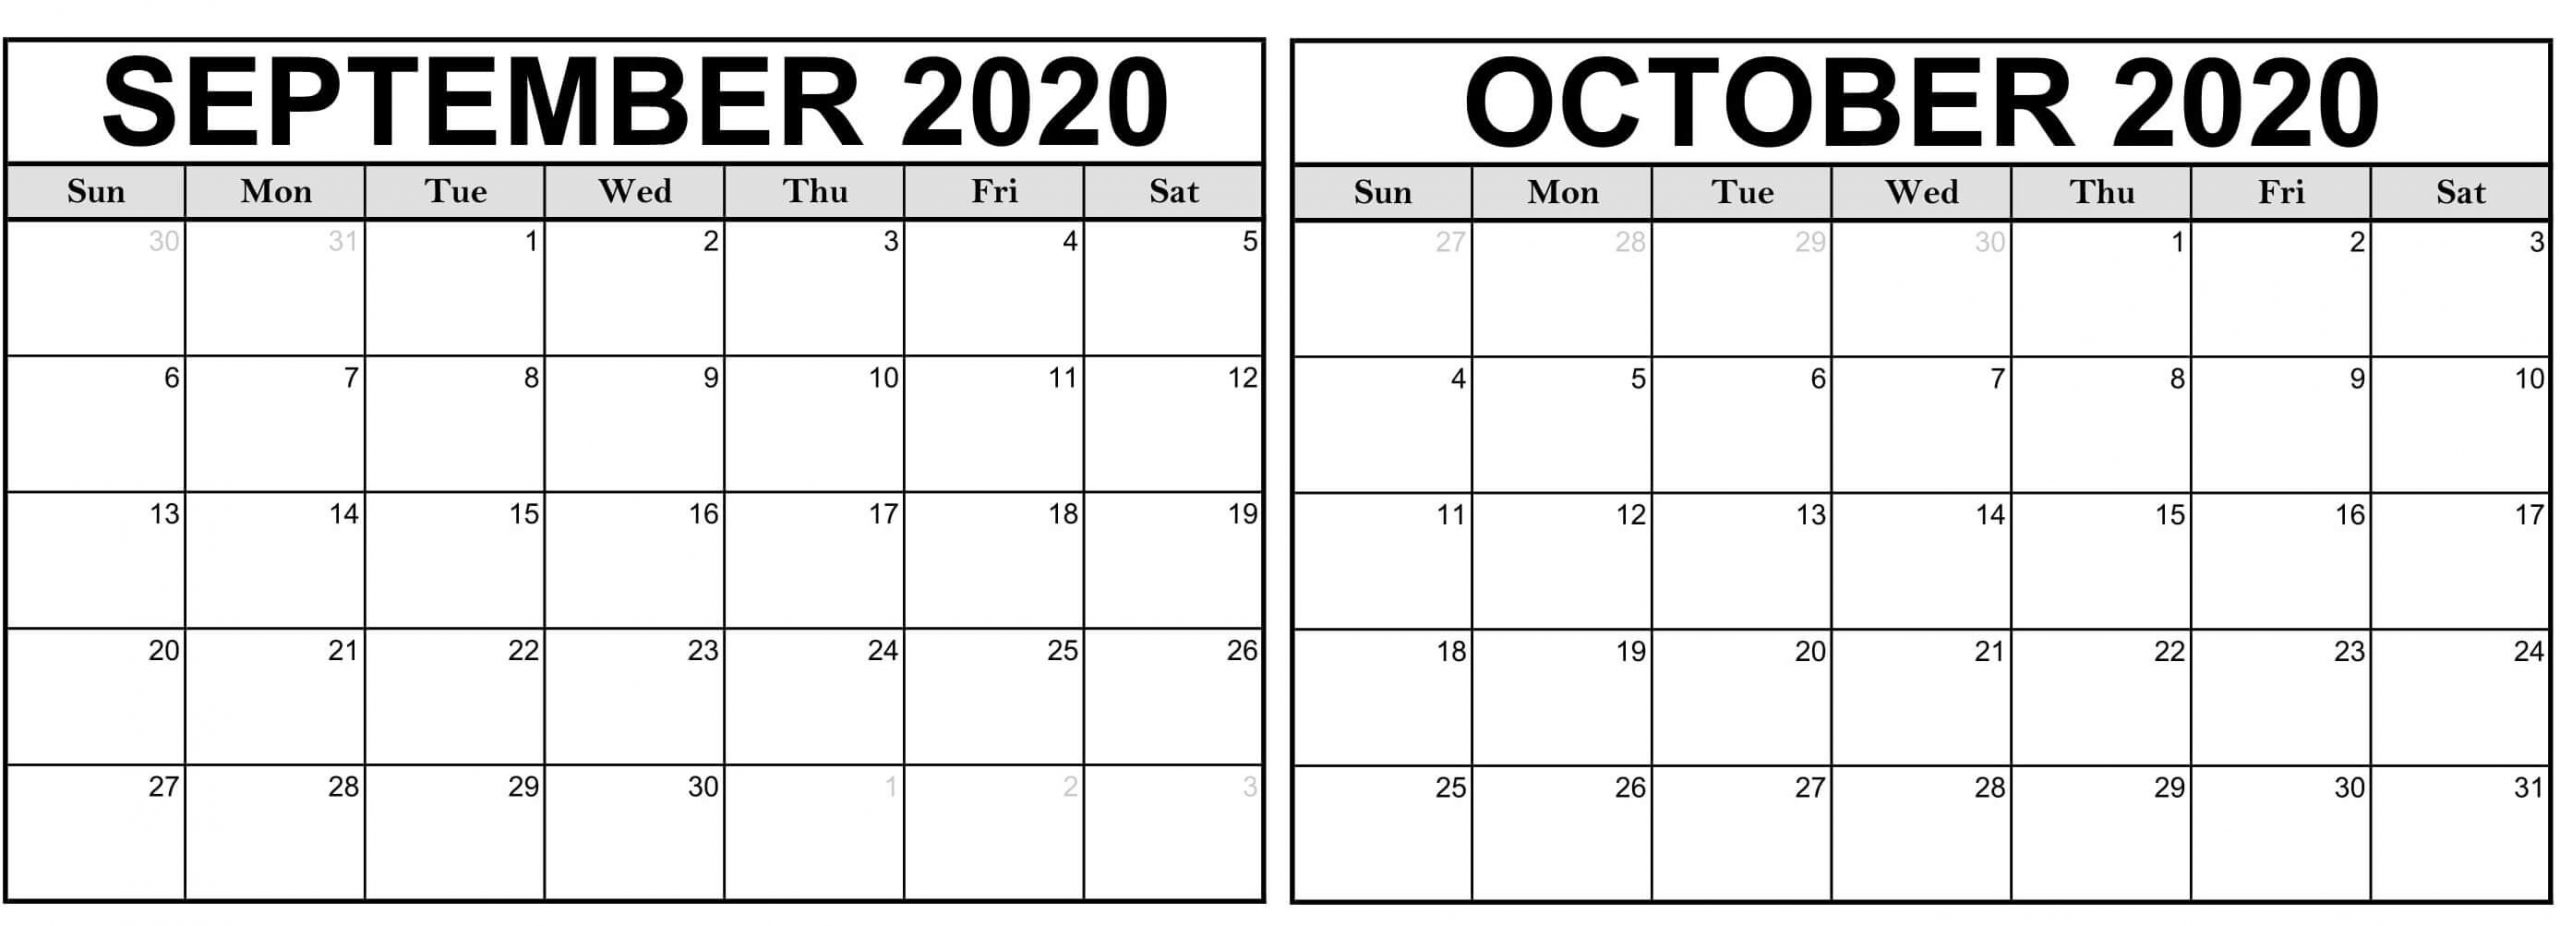 September 2020 To February 2021 Calendar With Notes - 2019 Calendars For Students Education October 2020 Through September 2021 Calendar